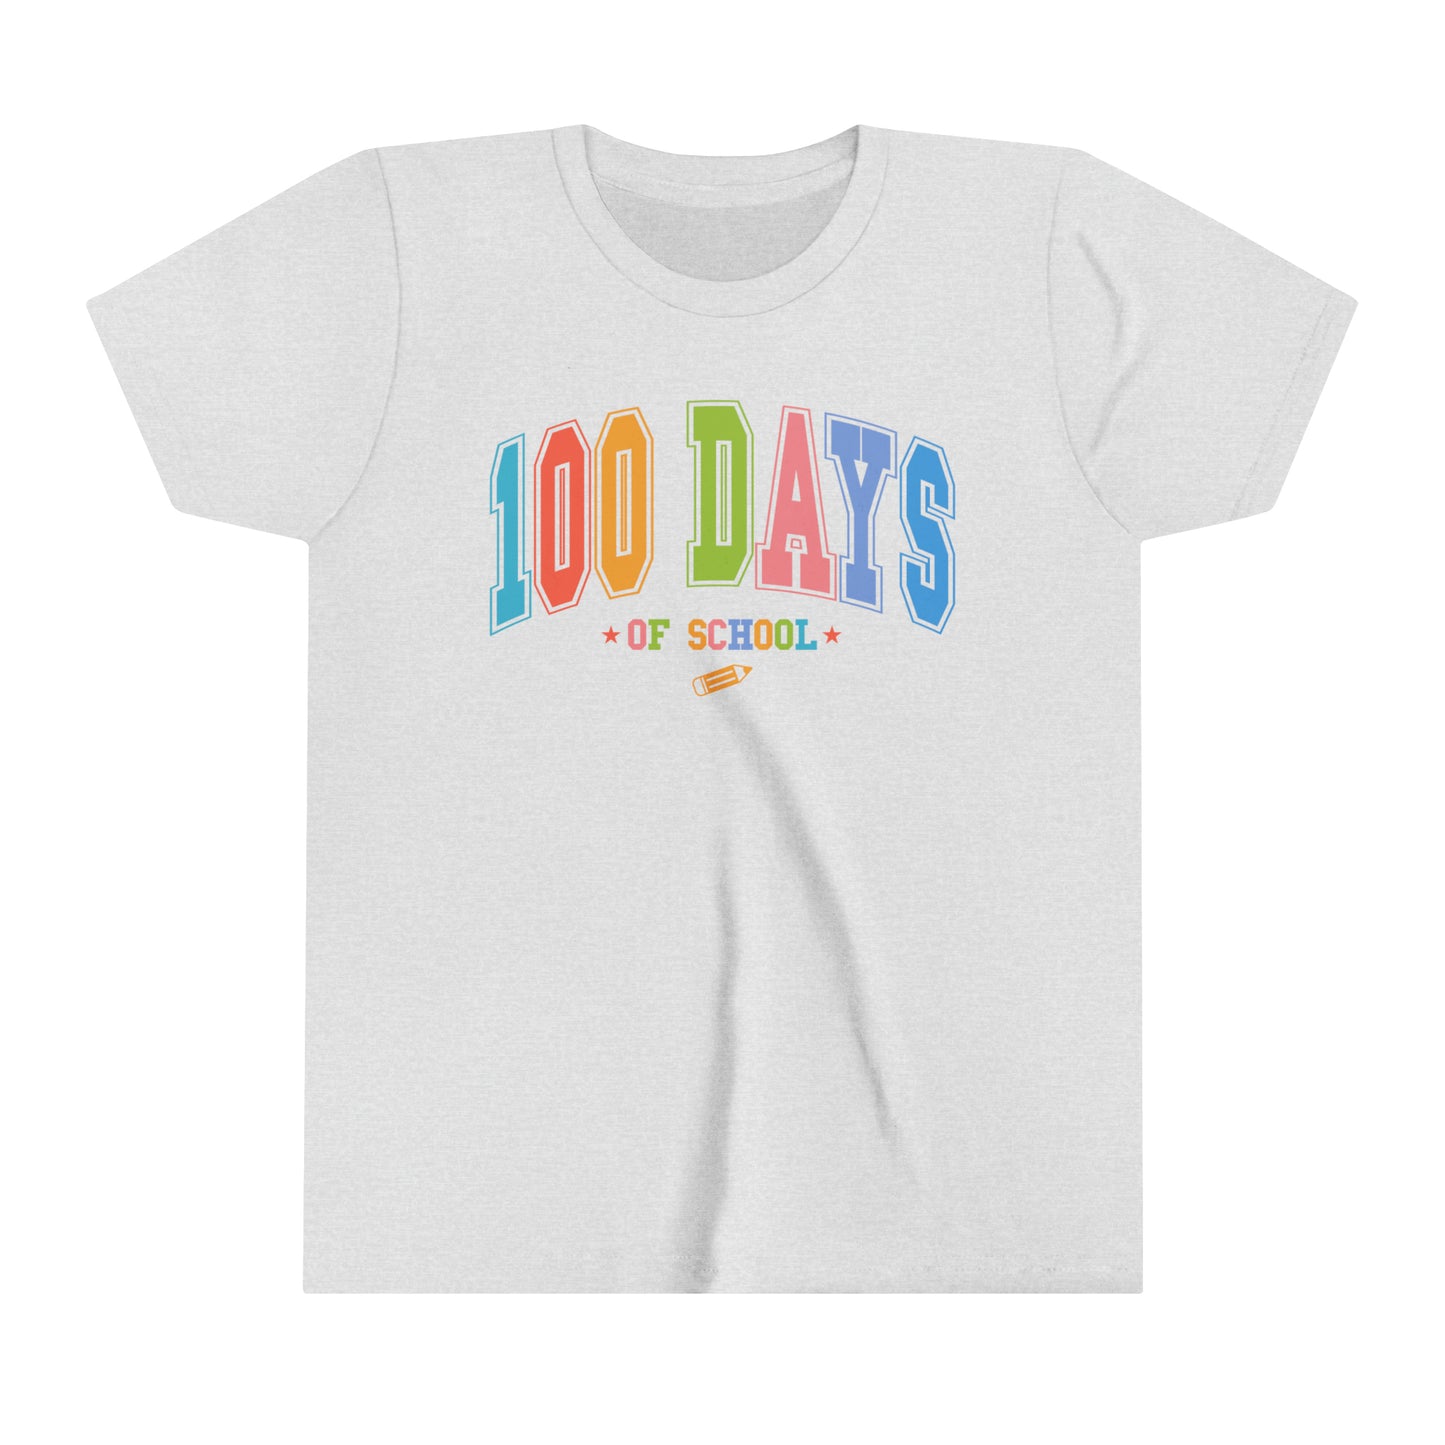 100 Days of School Girl's Youth Short Sleeve Tee